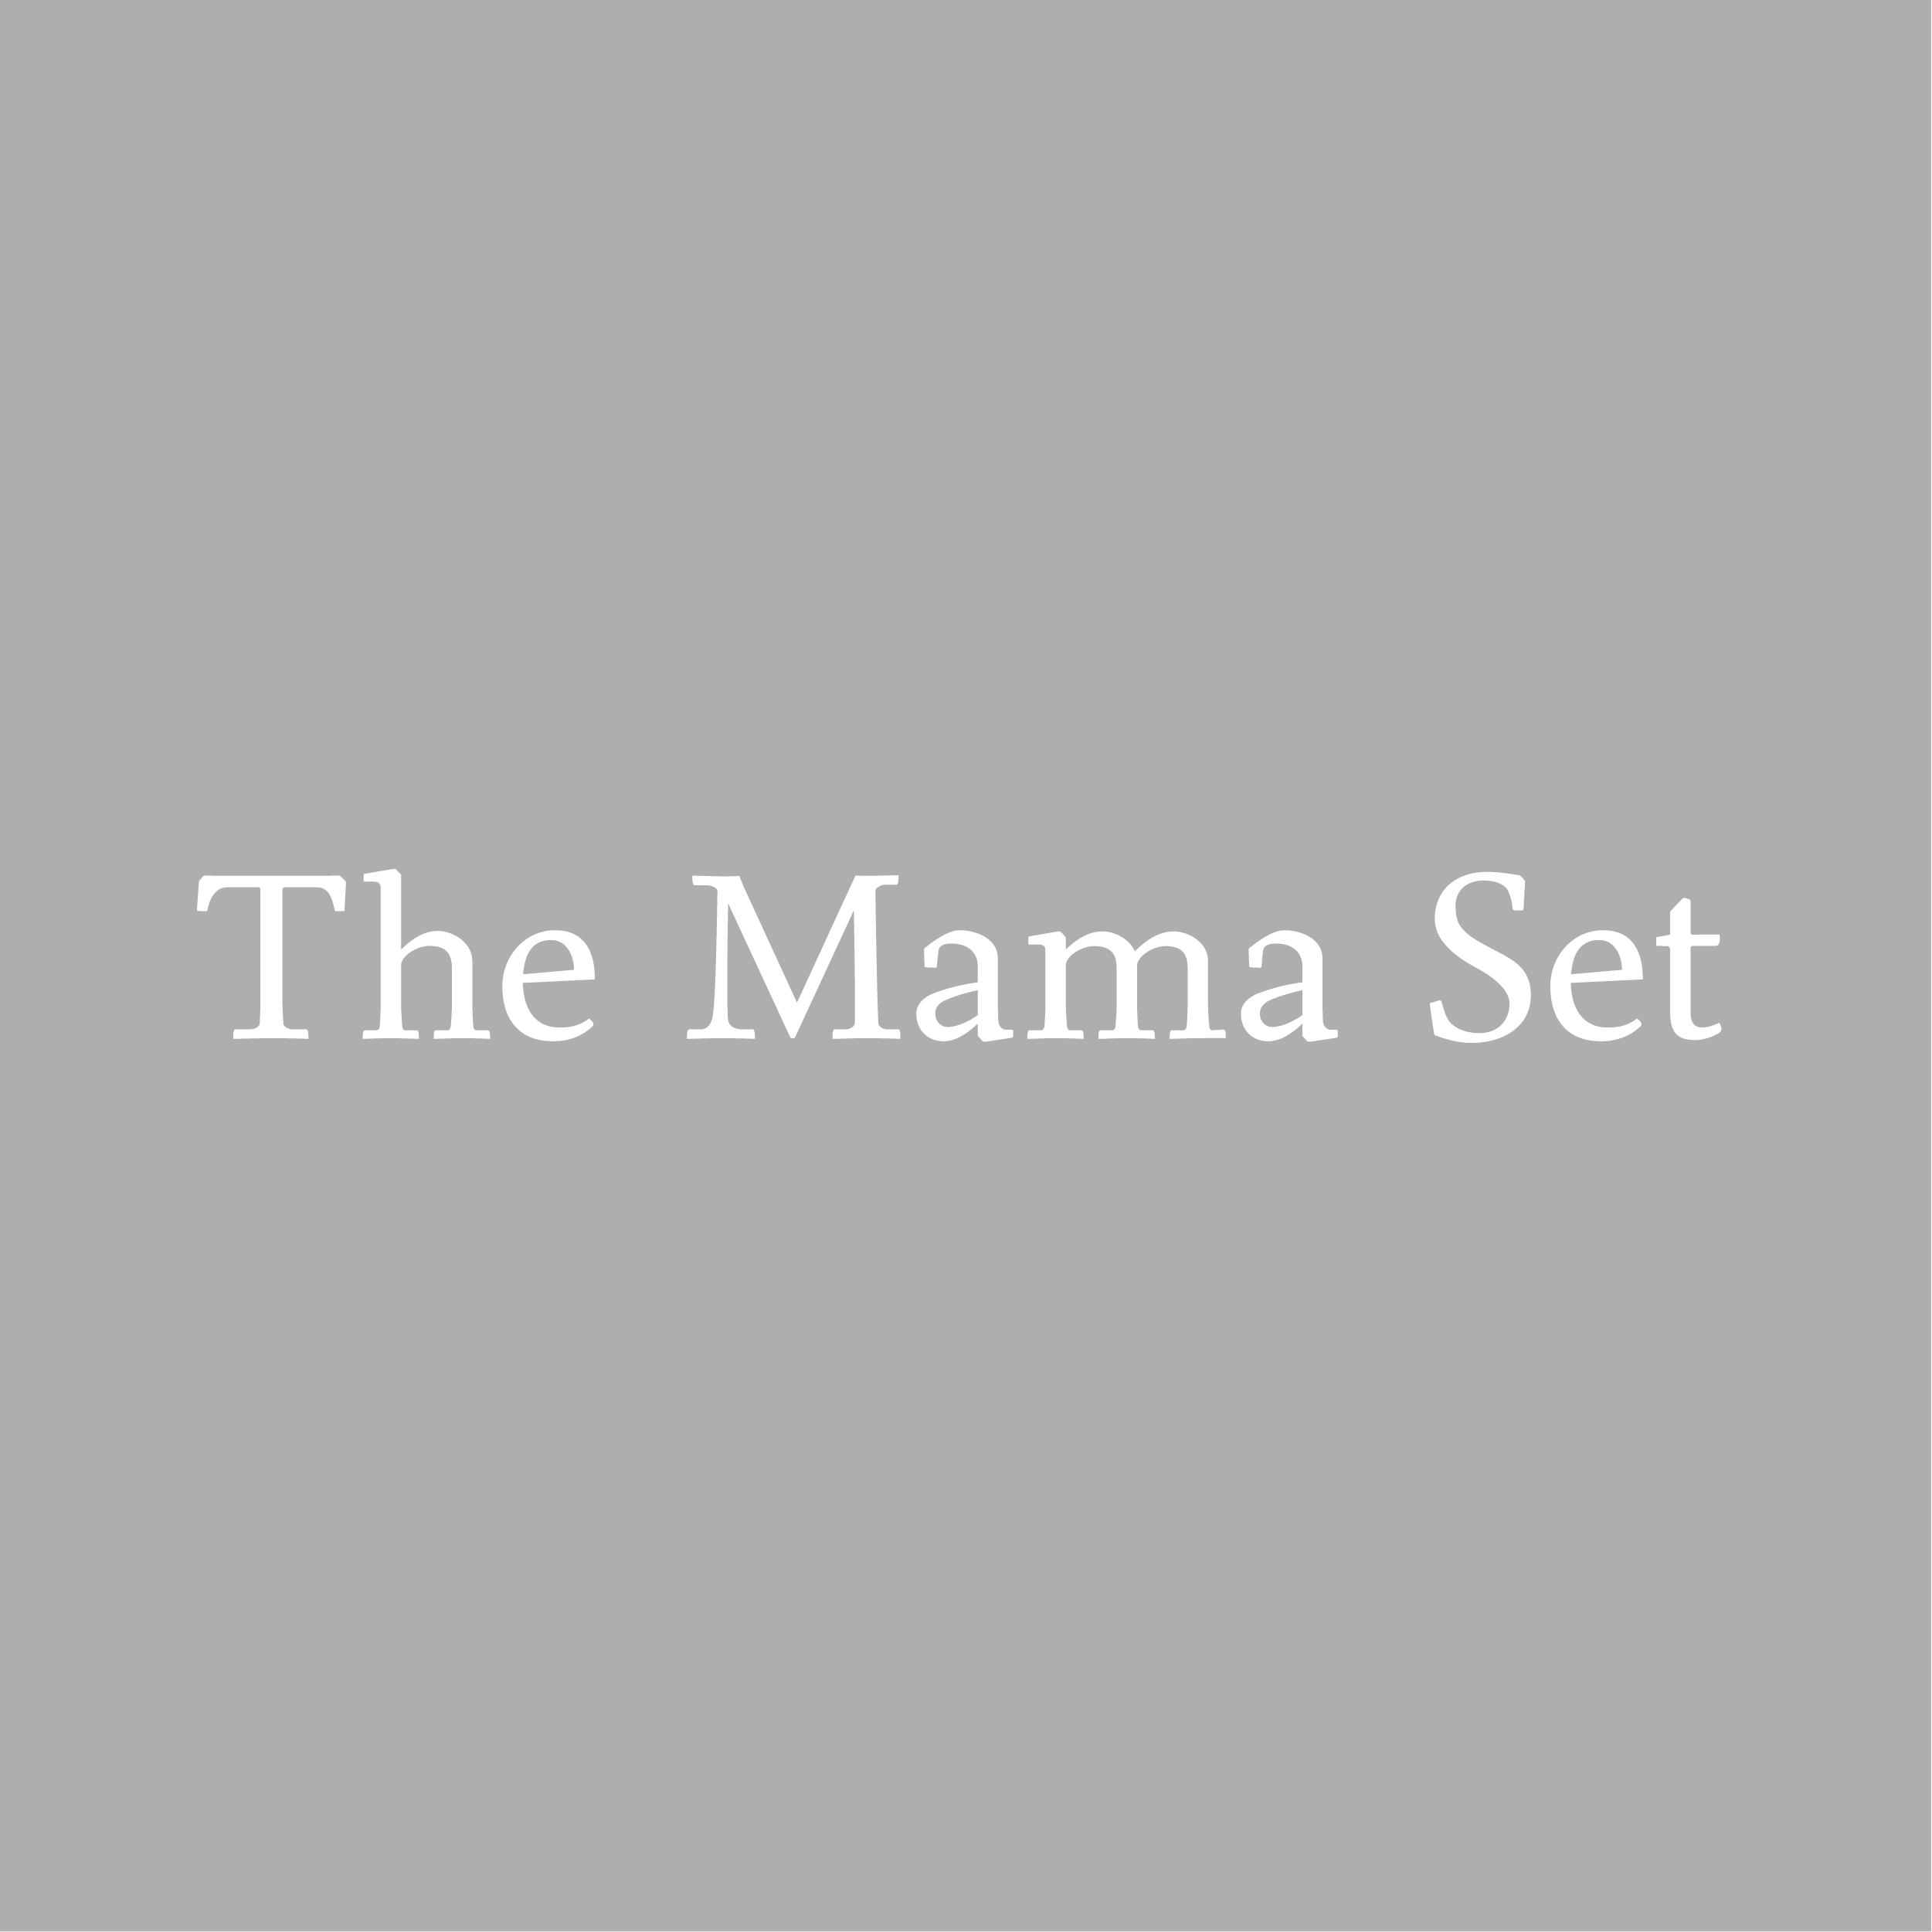 The Mama Set